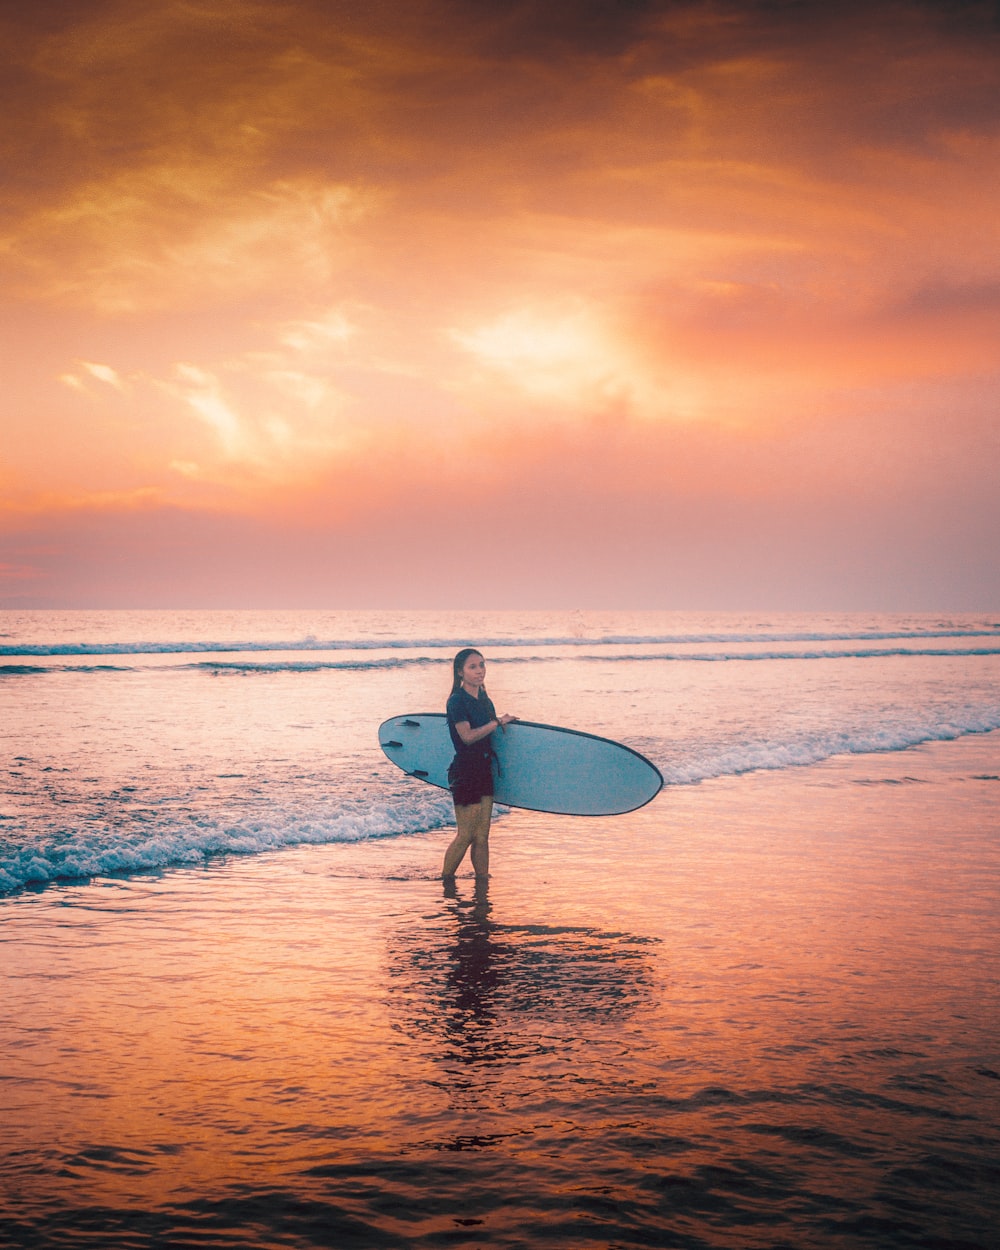 homem na camisa branca segurando a prancha de surf branca andando na praia durante o pôr do sol